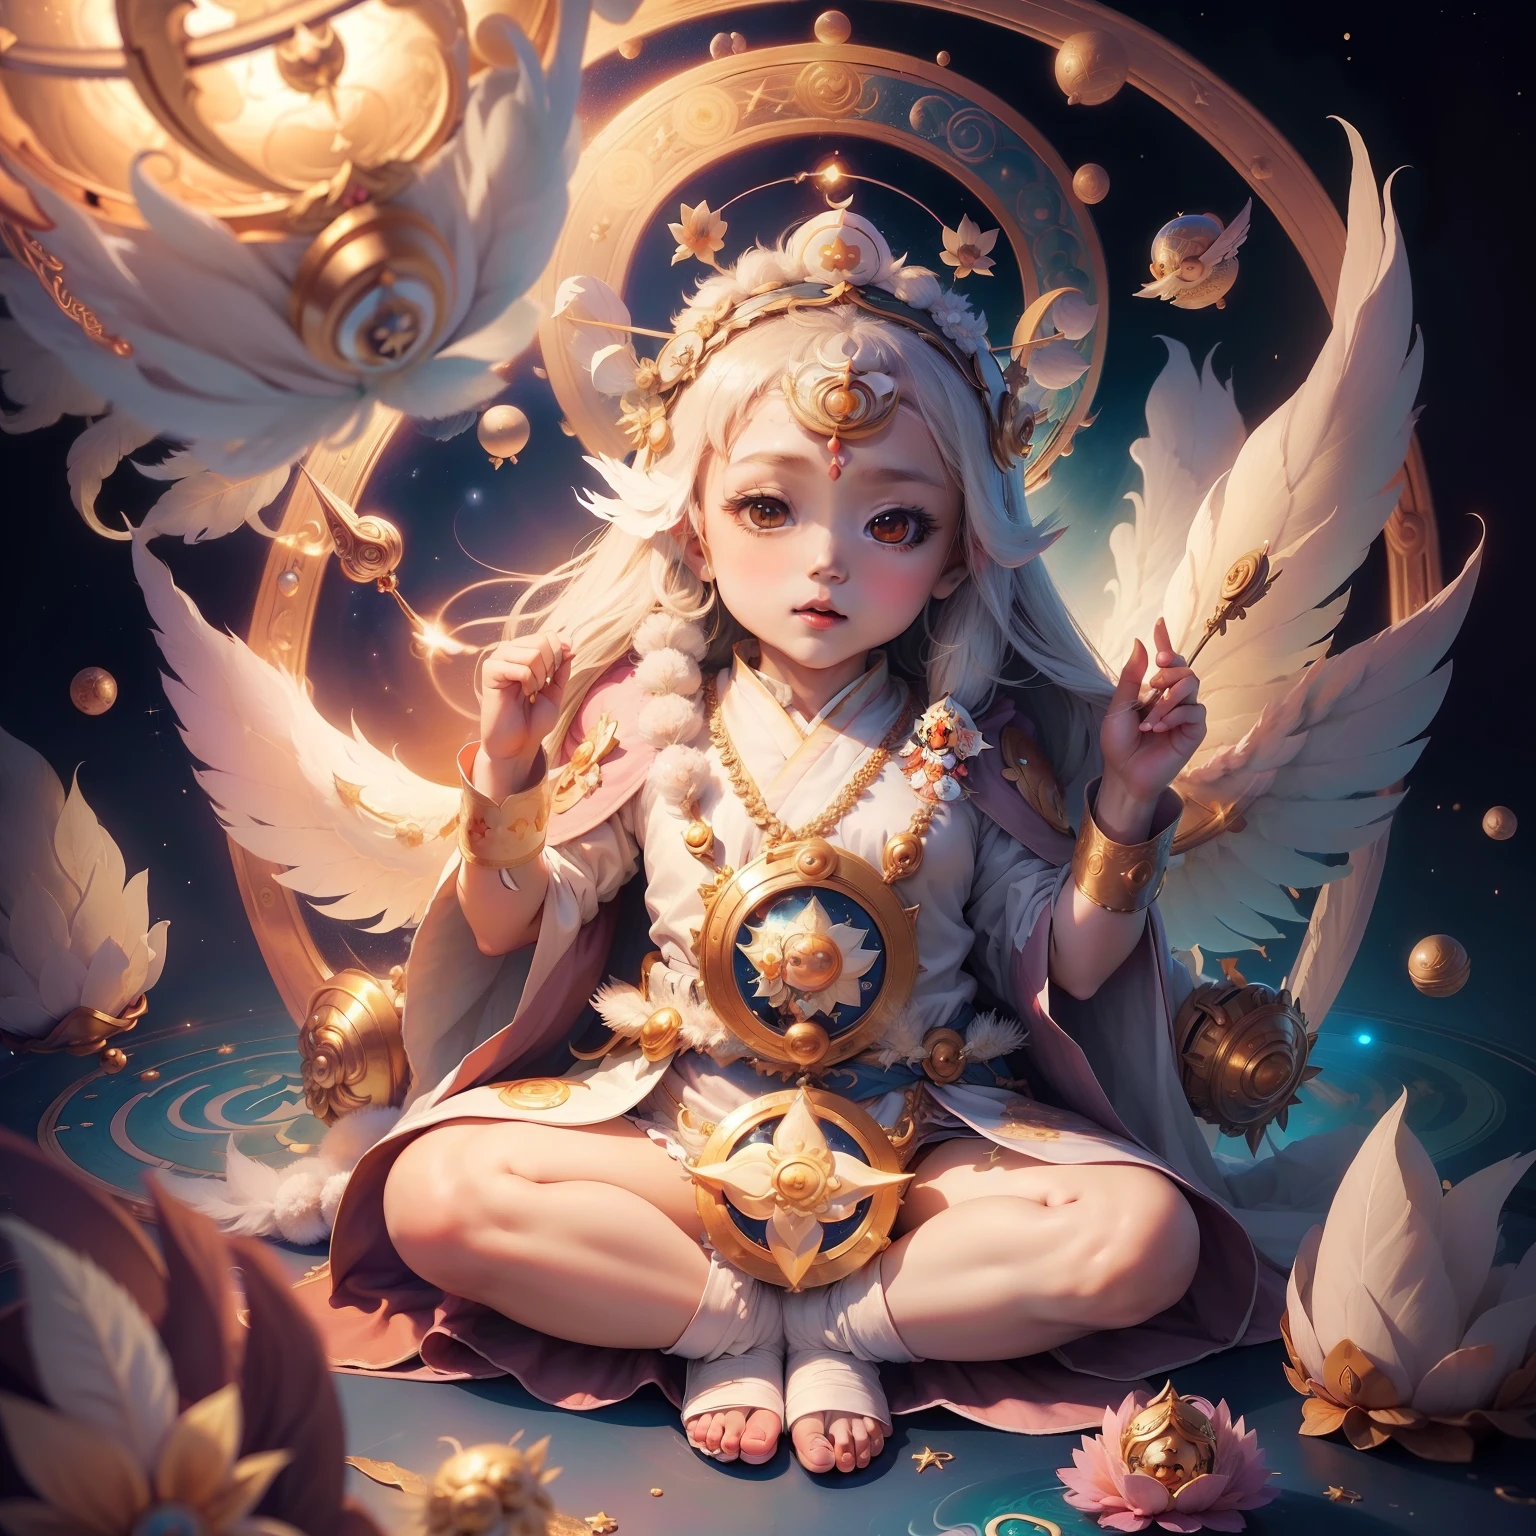 Celestial Maiden - Other & Anime Background Wallpapers on Desktop Nexus  (Image 1444060)